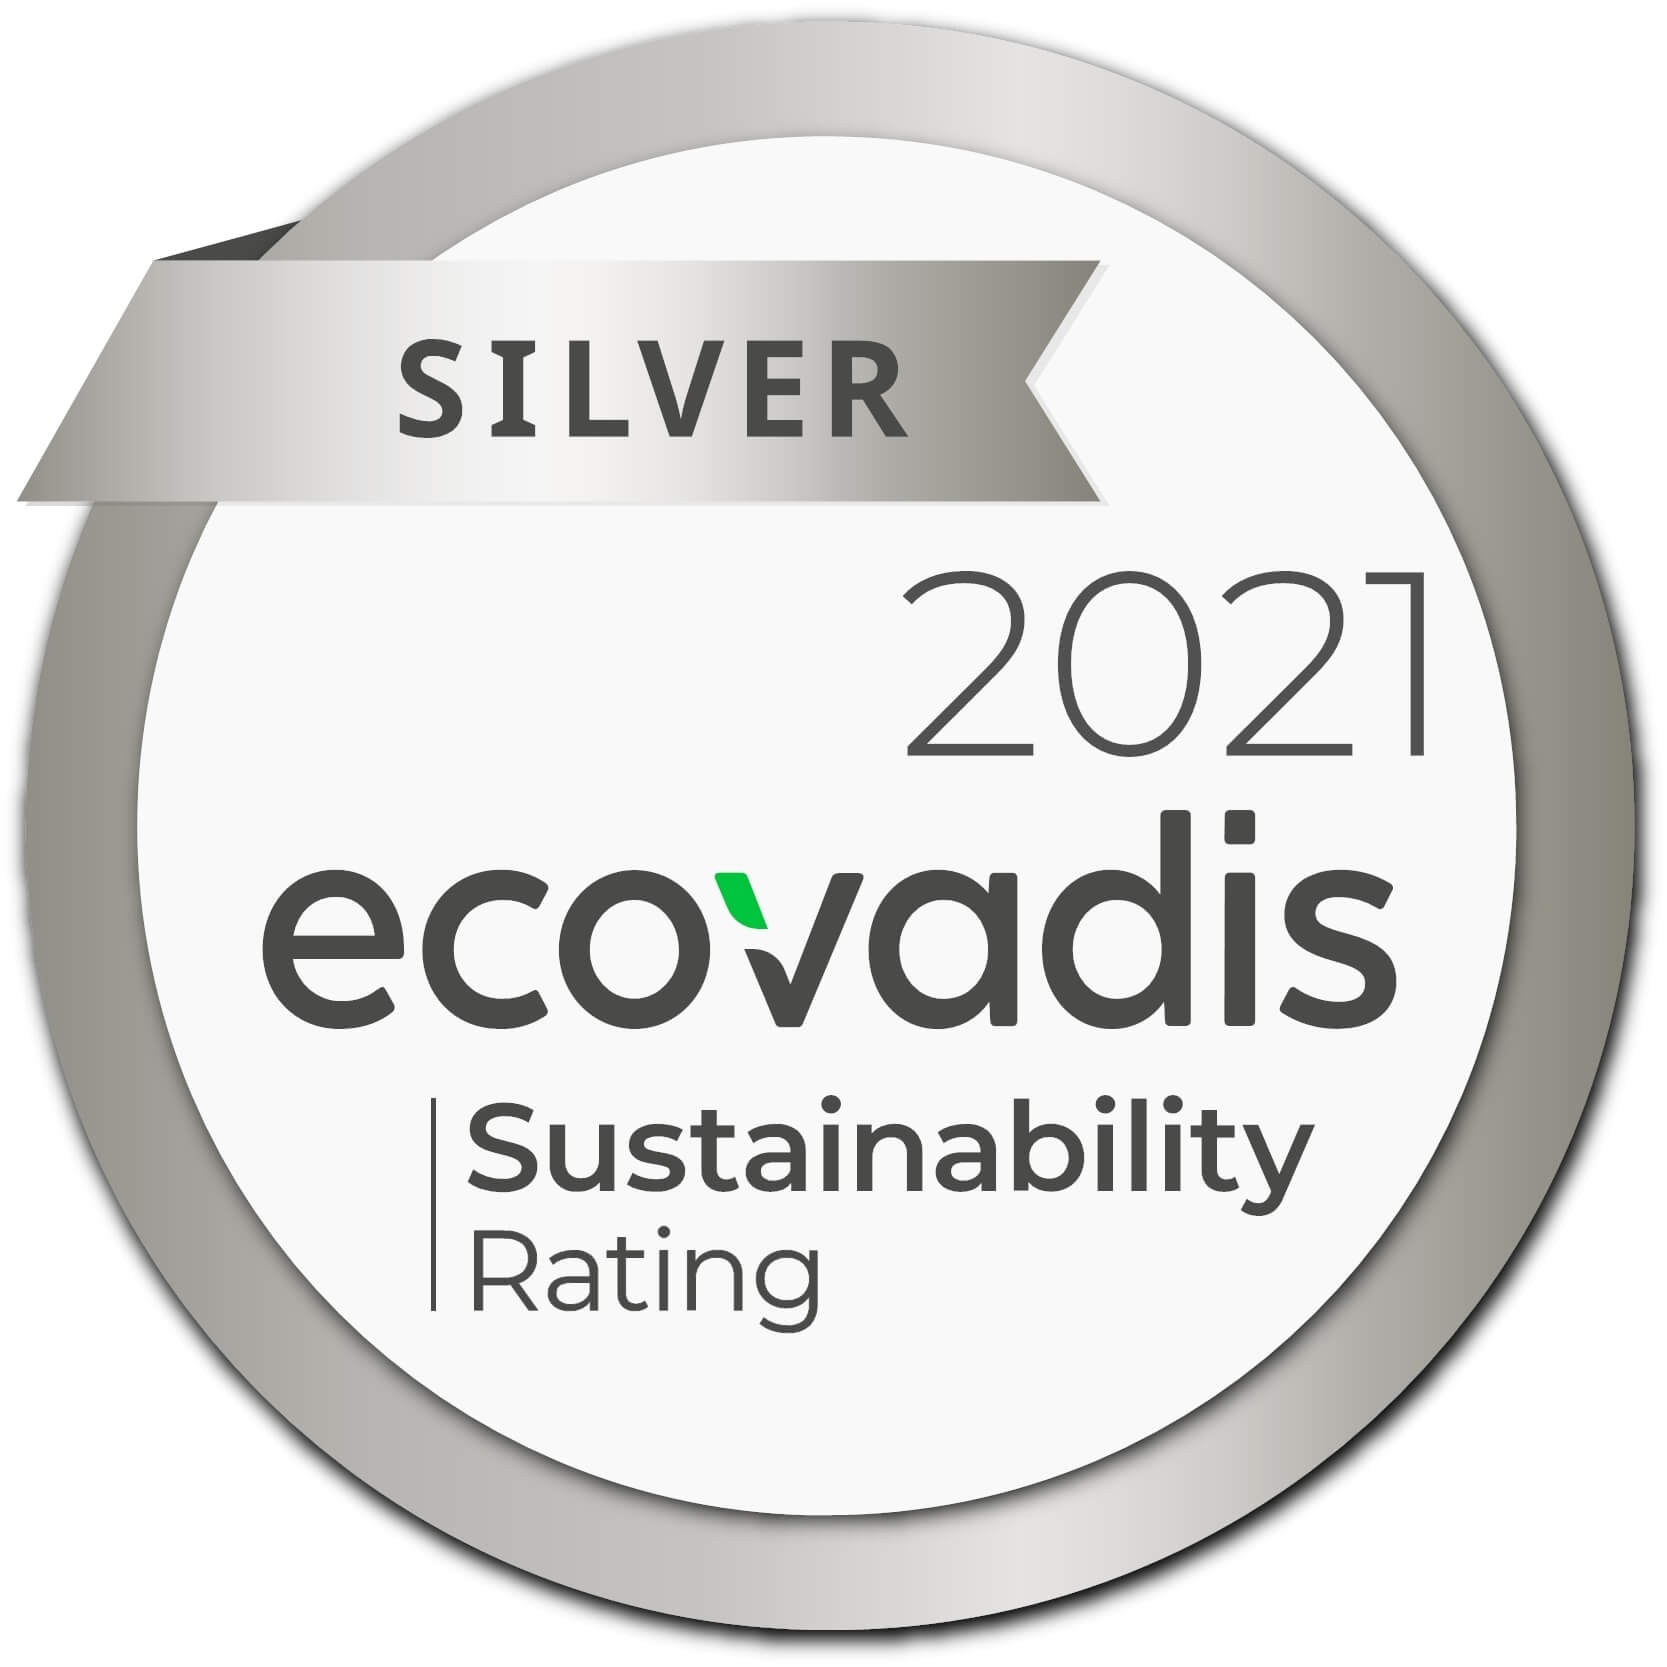 Ecovardis_Silver_Award (1)